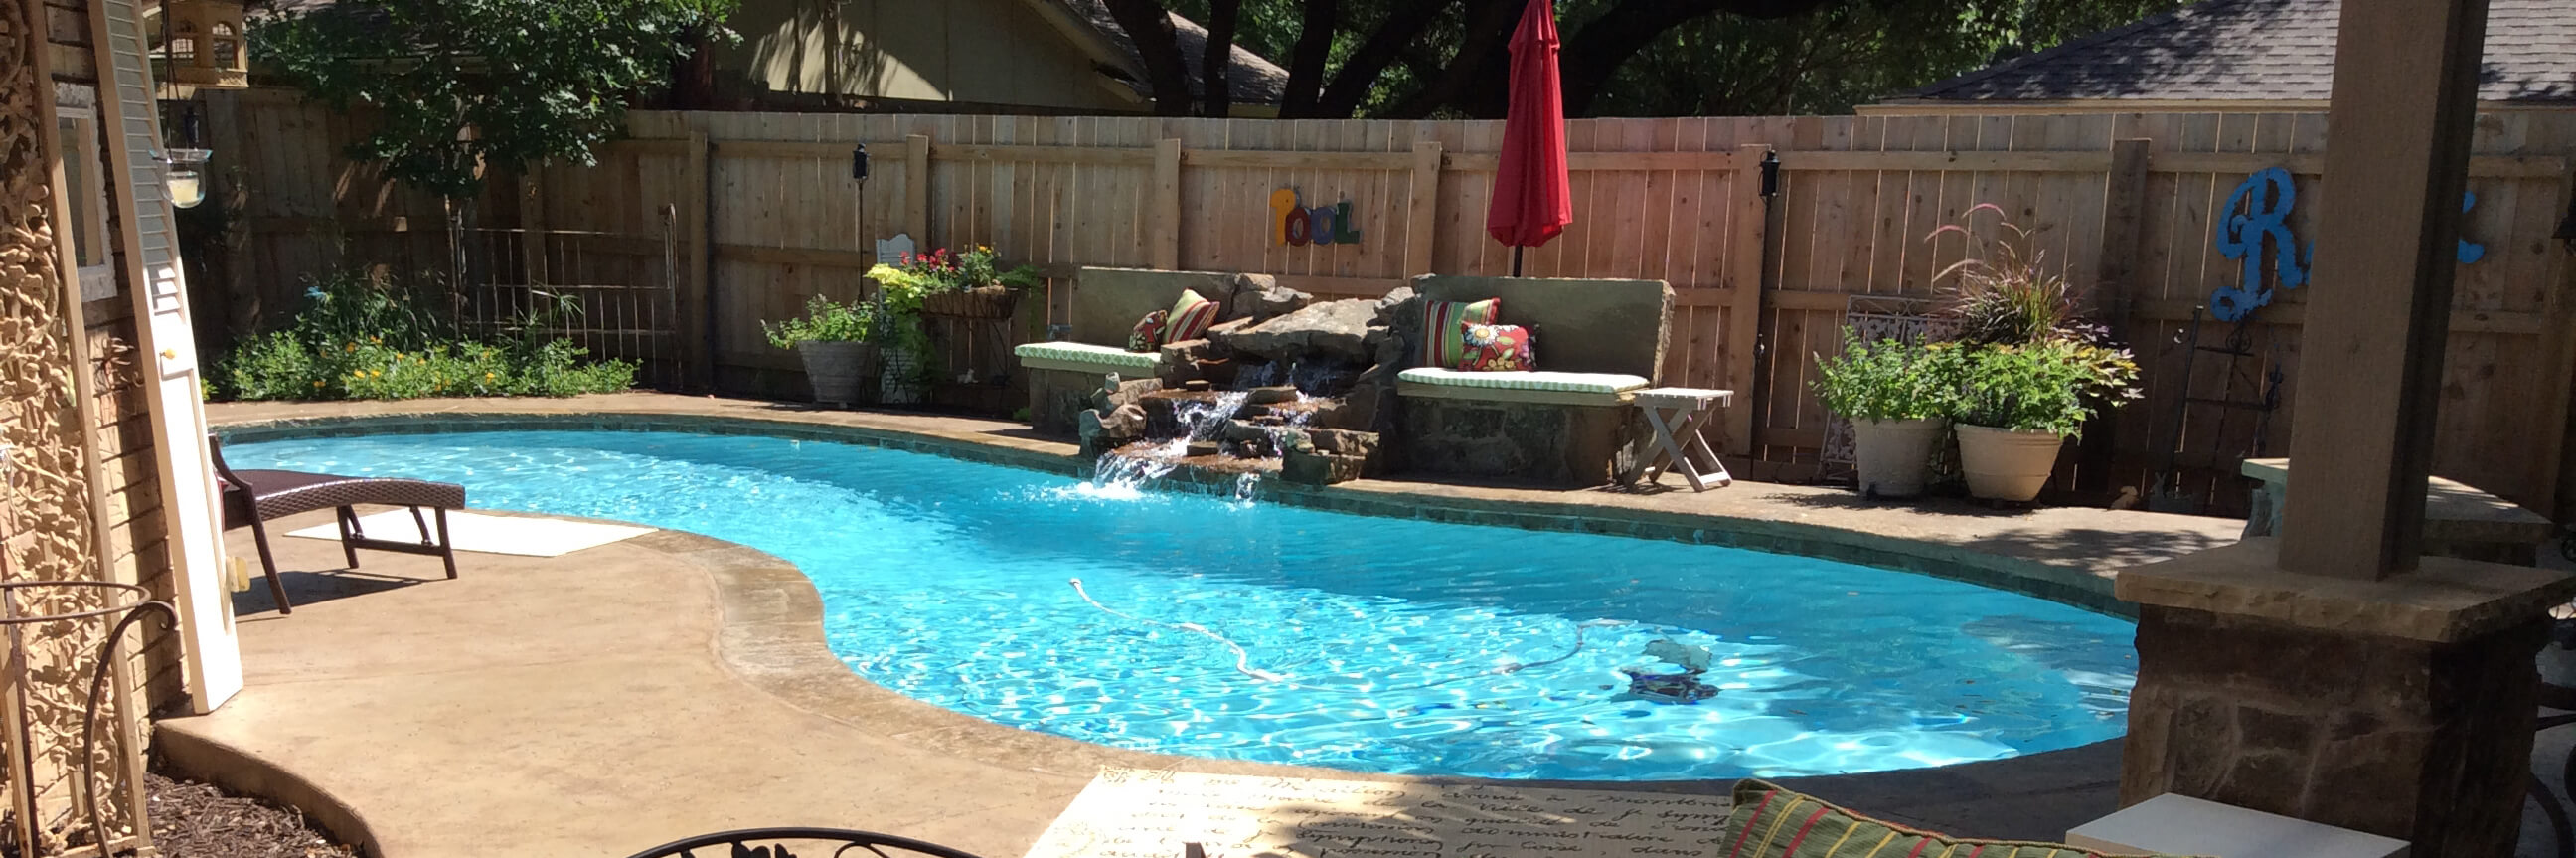 Total pool renovation in Dallas